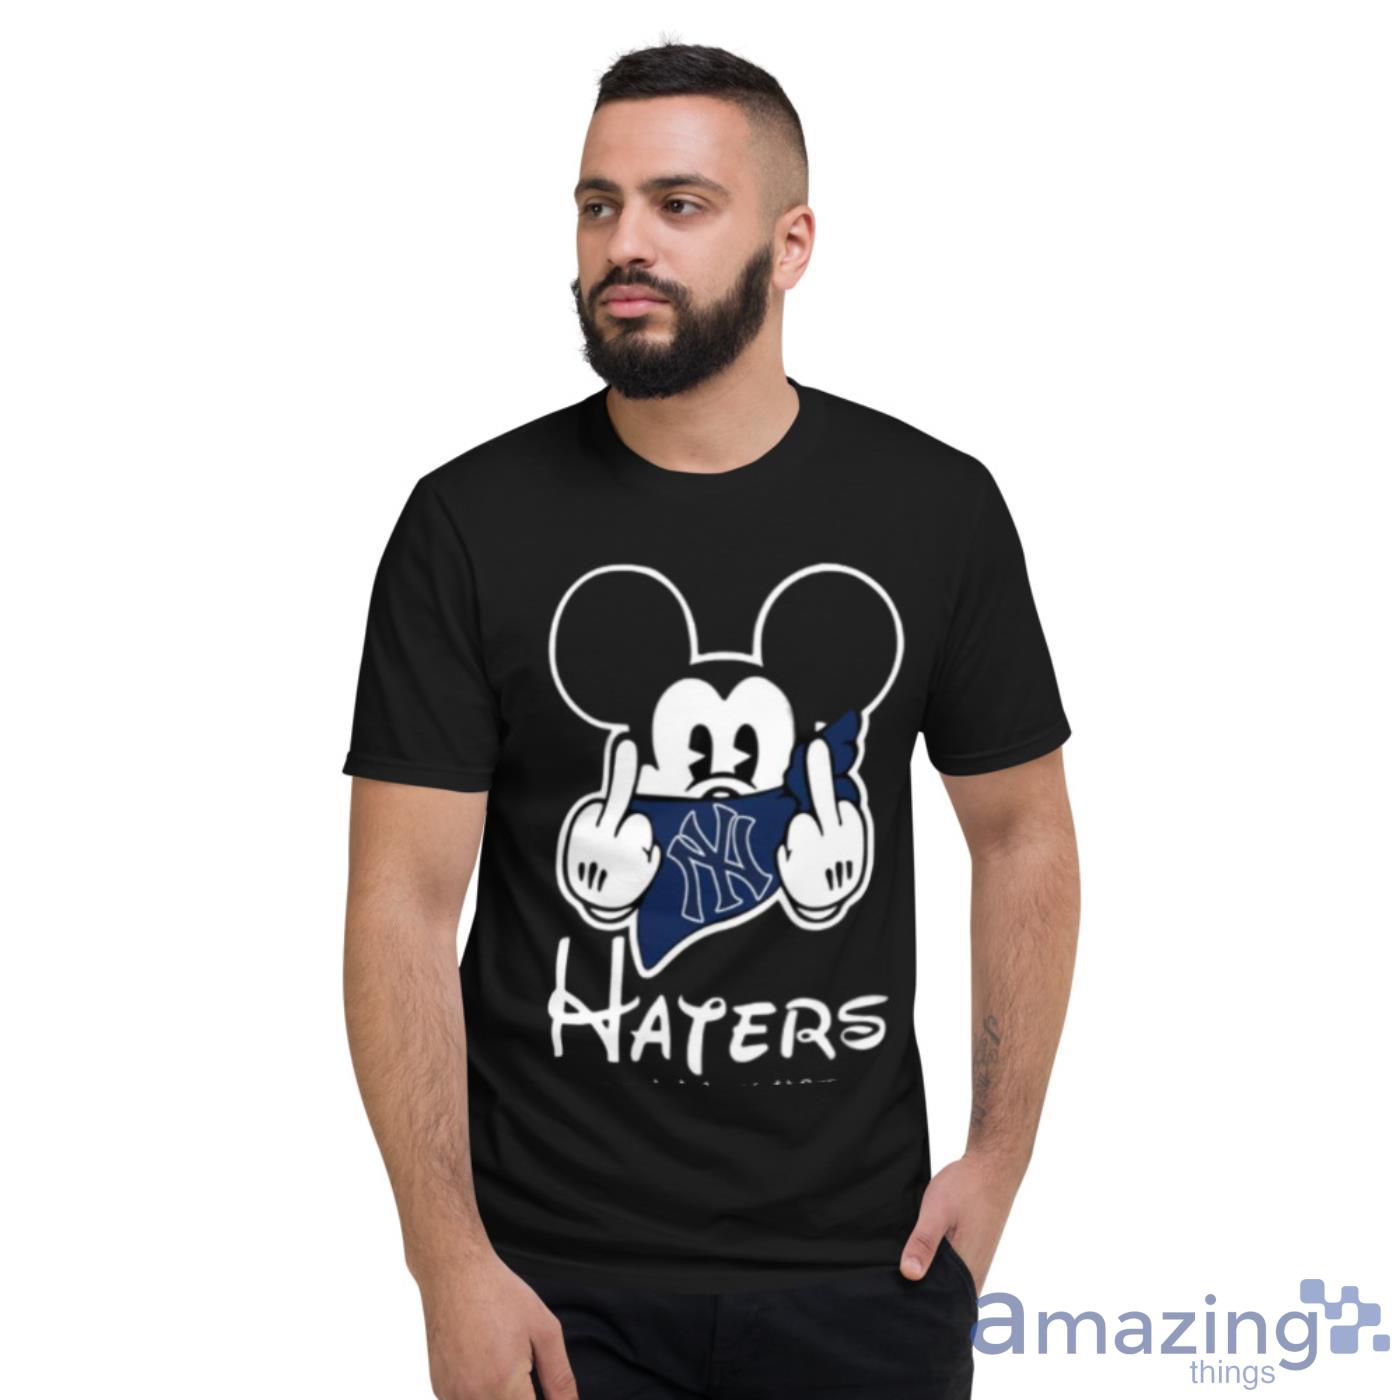 MLB New York Yankees Haters Gonna Hate Mickey Mouse Disney Baseball Shirt